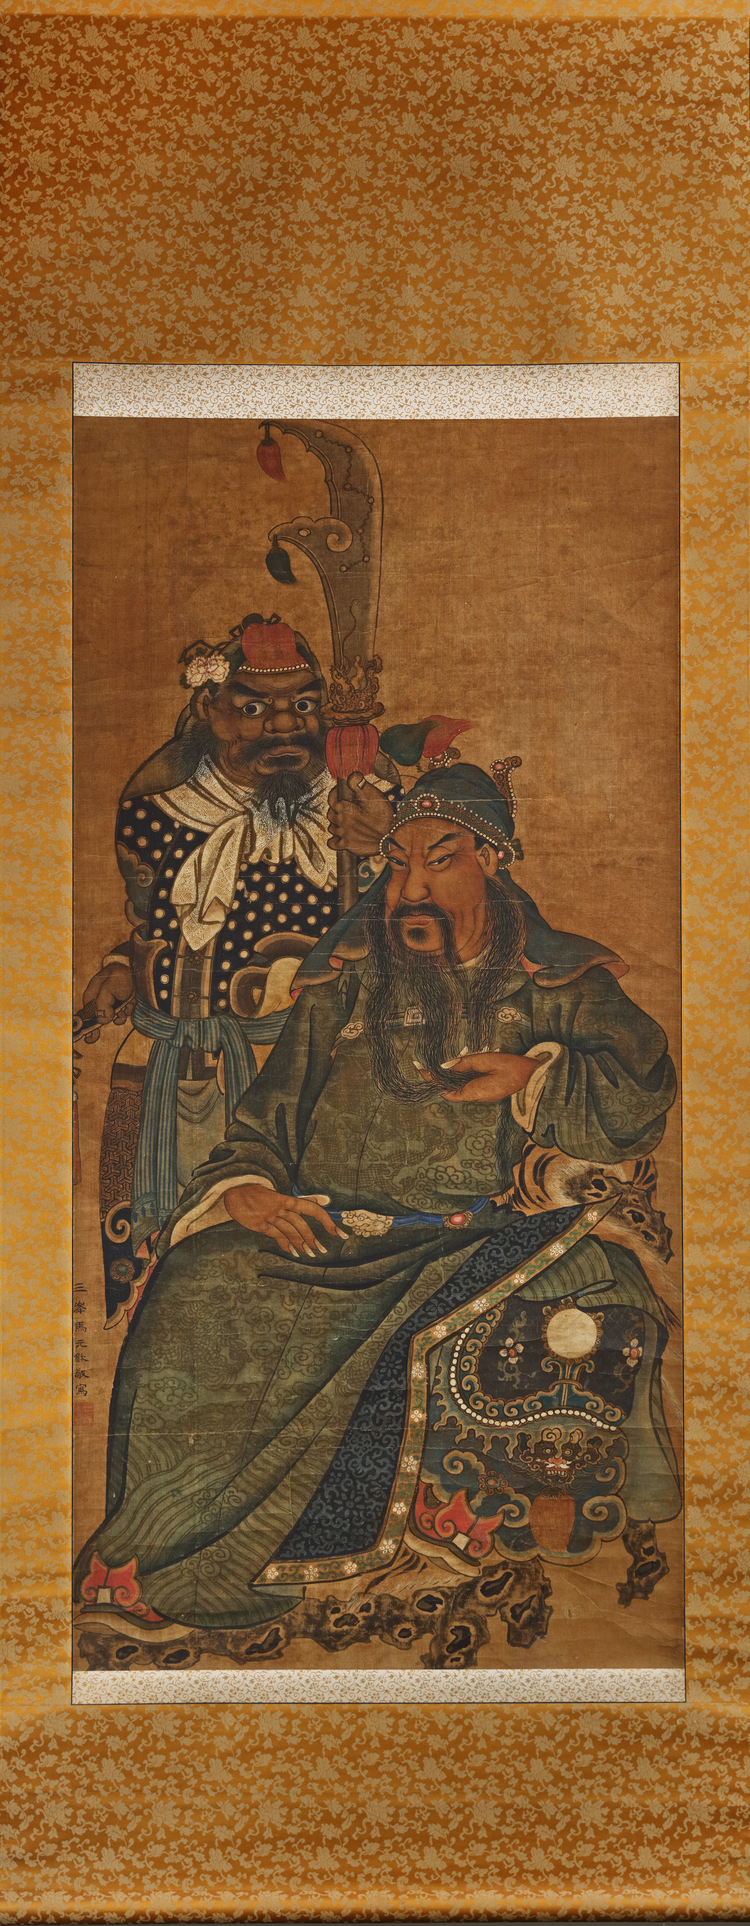 A CHINESE POLYCHROME PAINING DEPICTING THE GOD OF WAR GUAN YU (GUANDI)